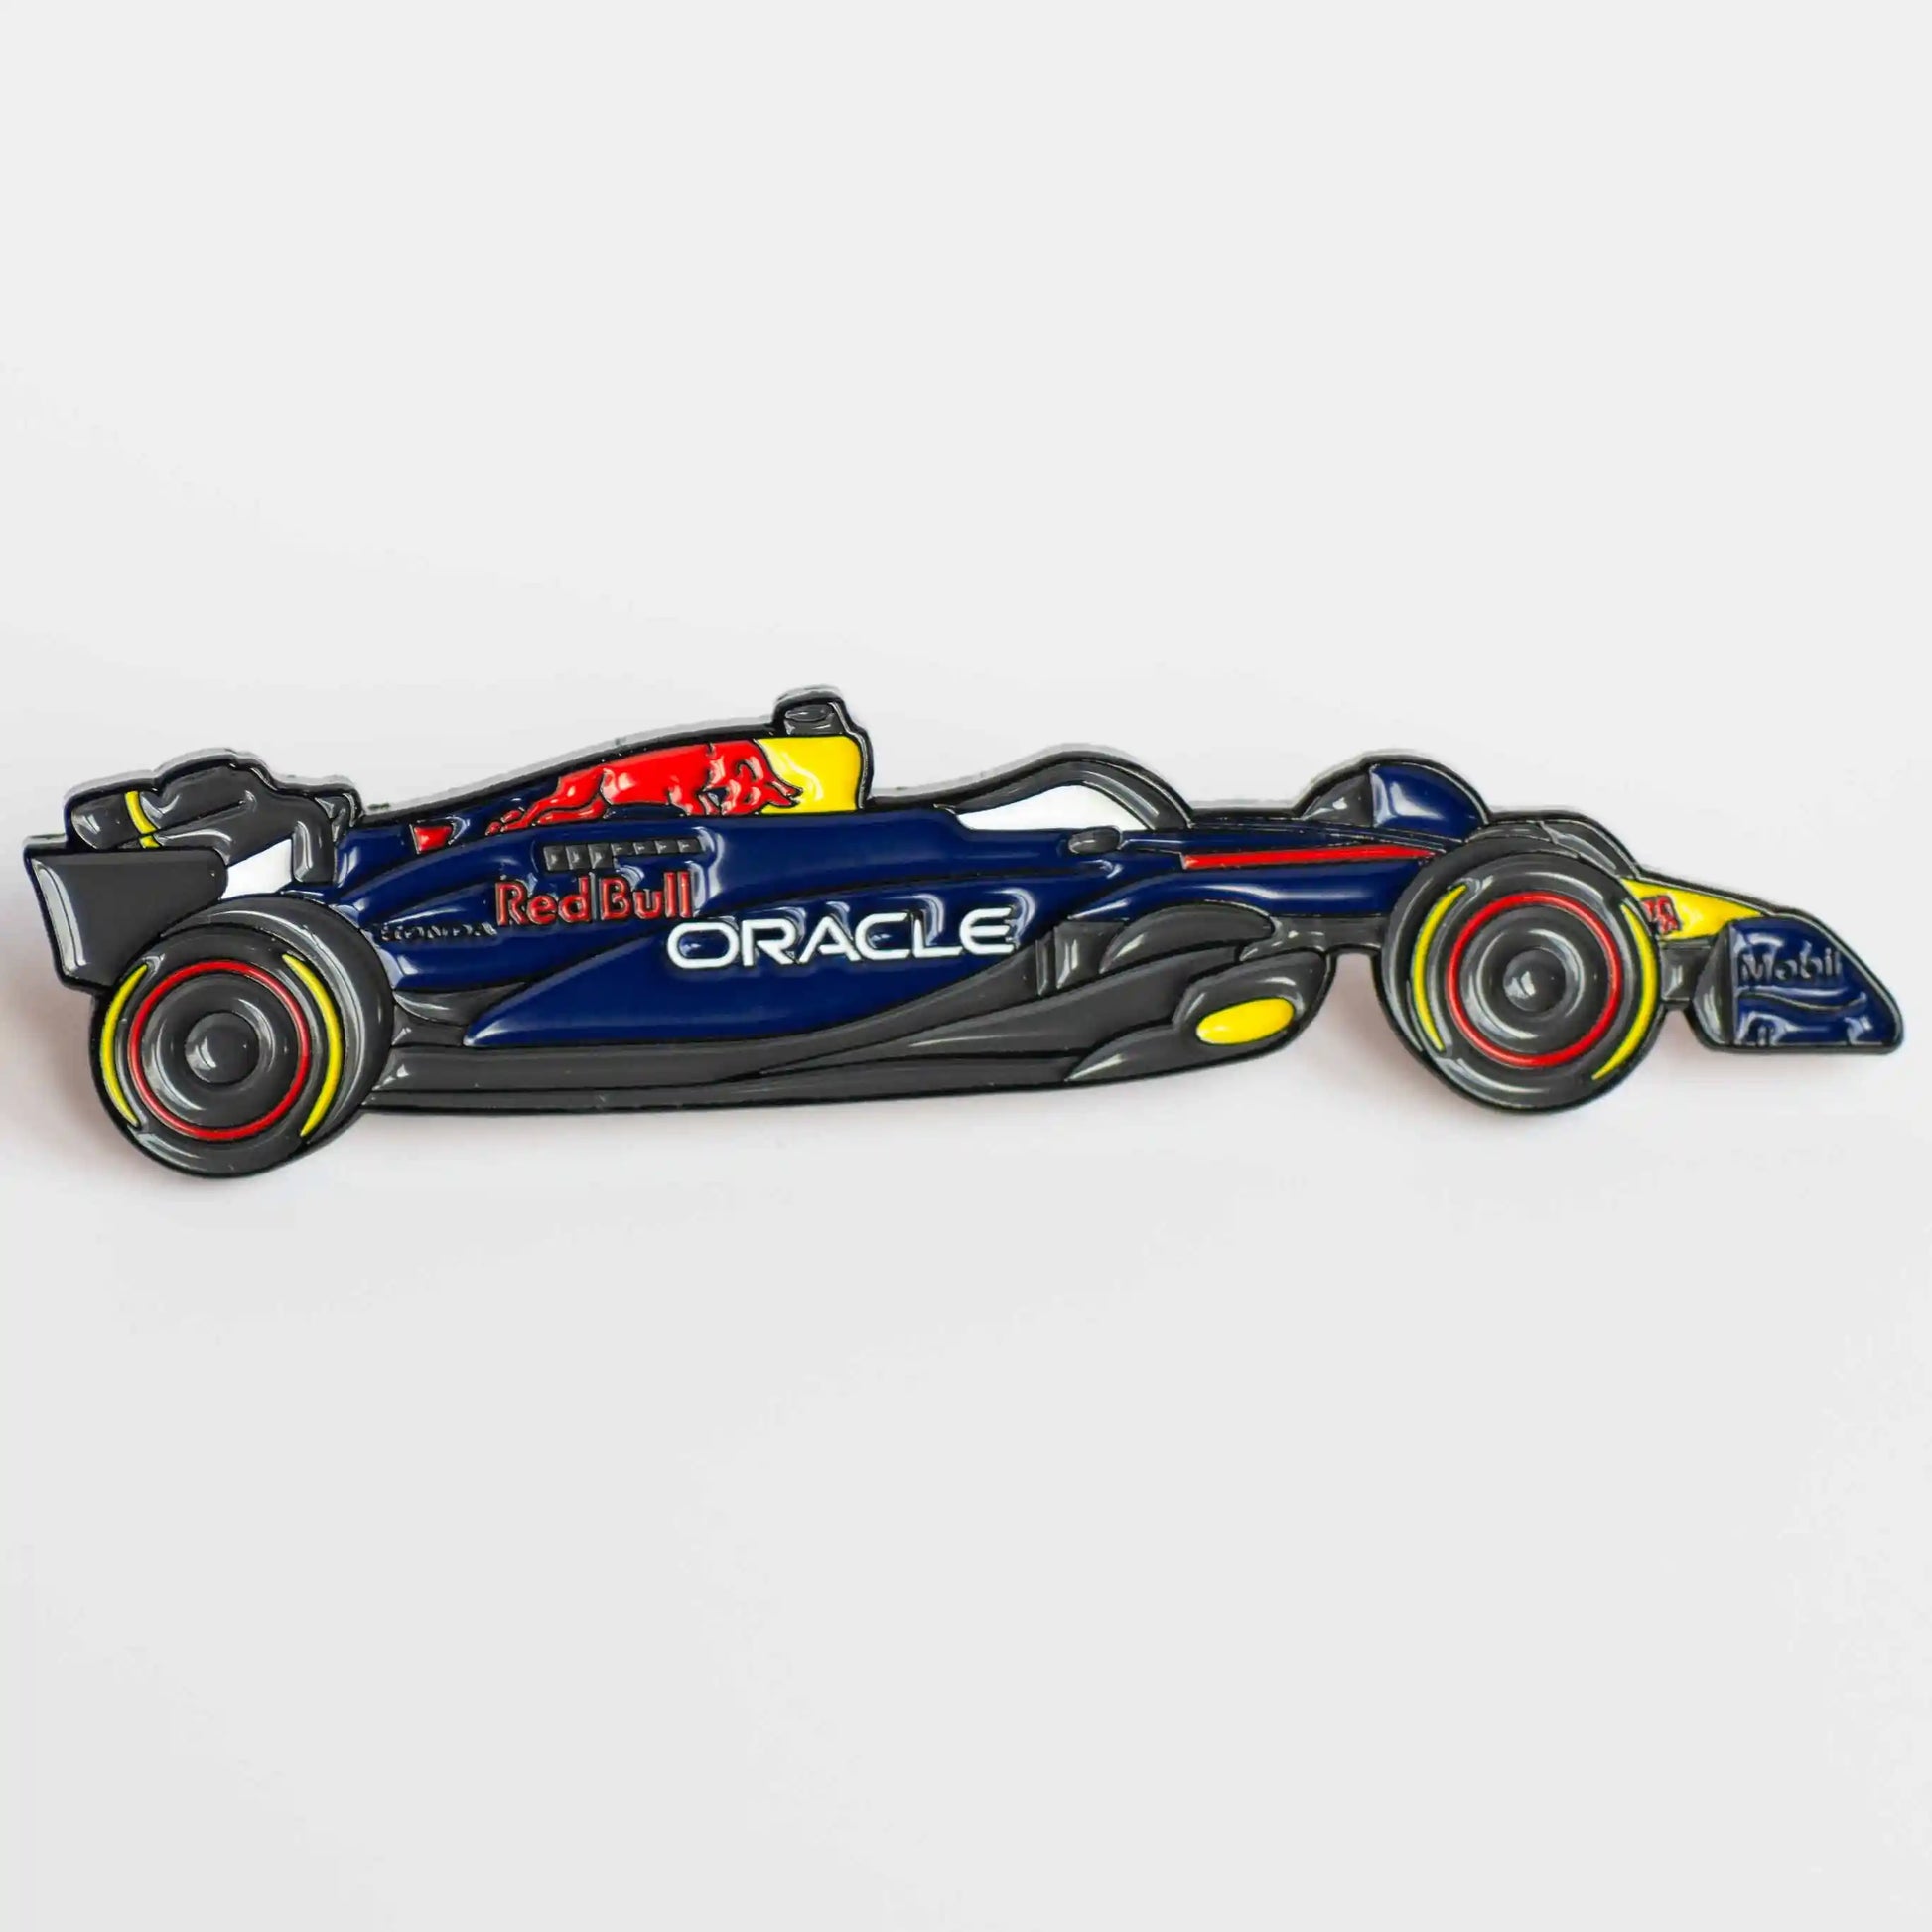 Red Bull RB20 Formula One Car Enamel Pin Badge shown on white background